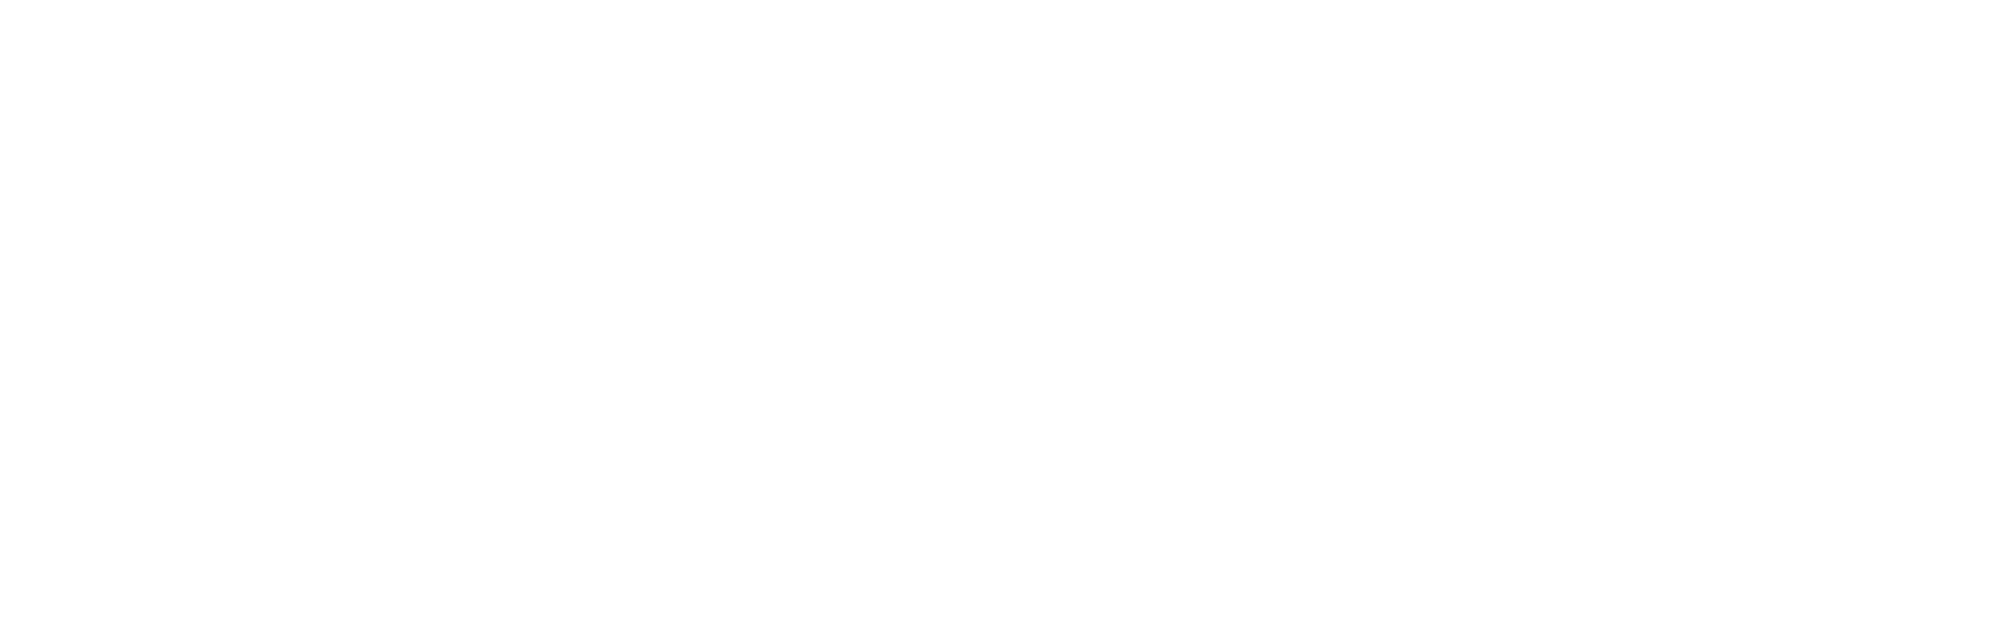 NEN Logo Zelfverklaring ISO 26000 WIT